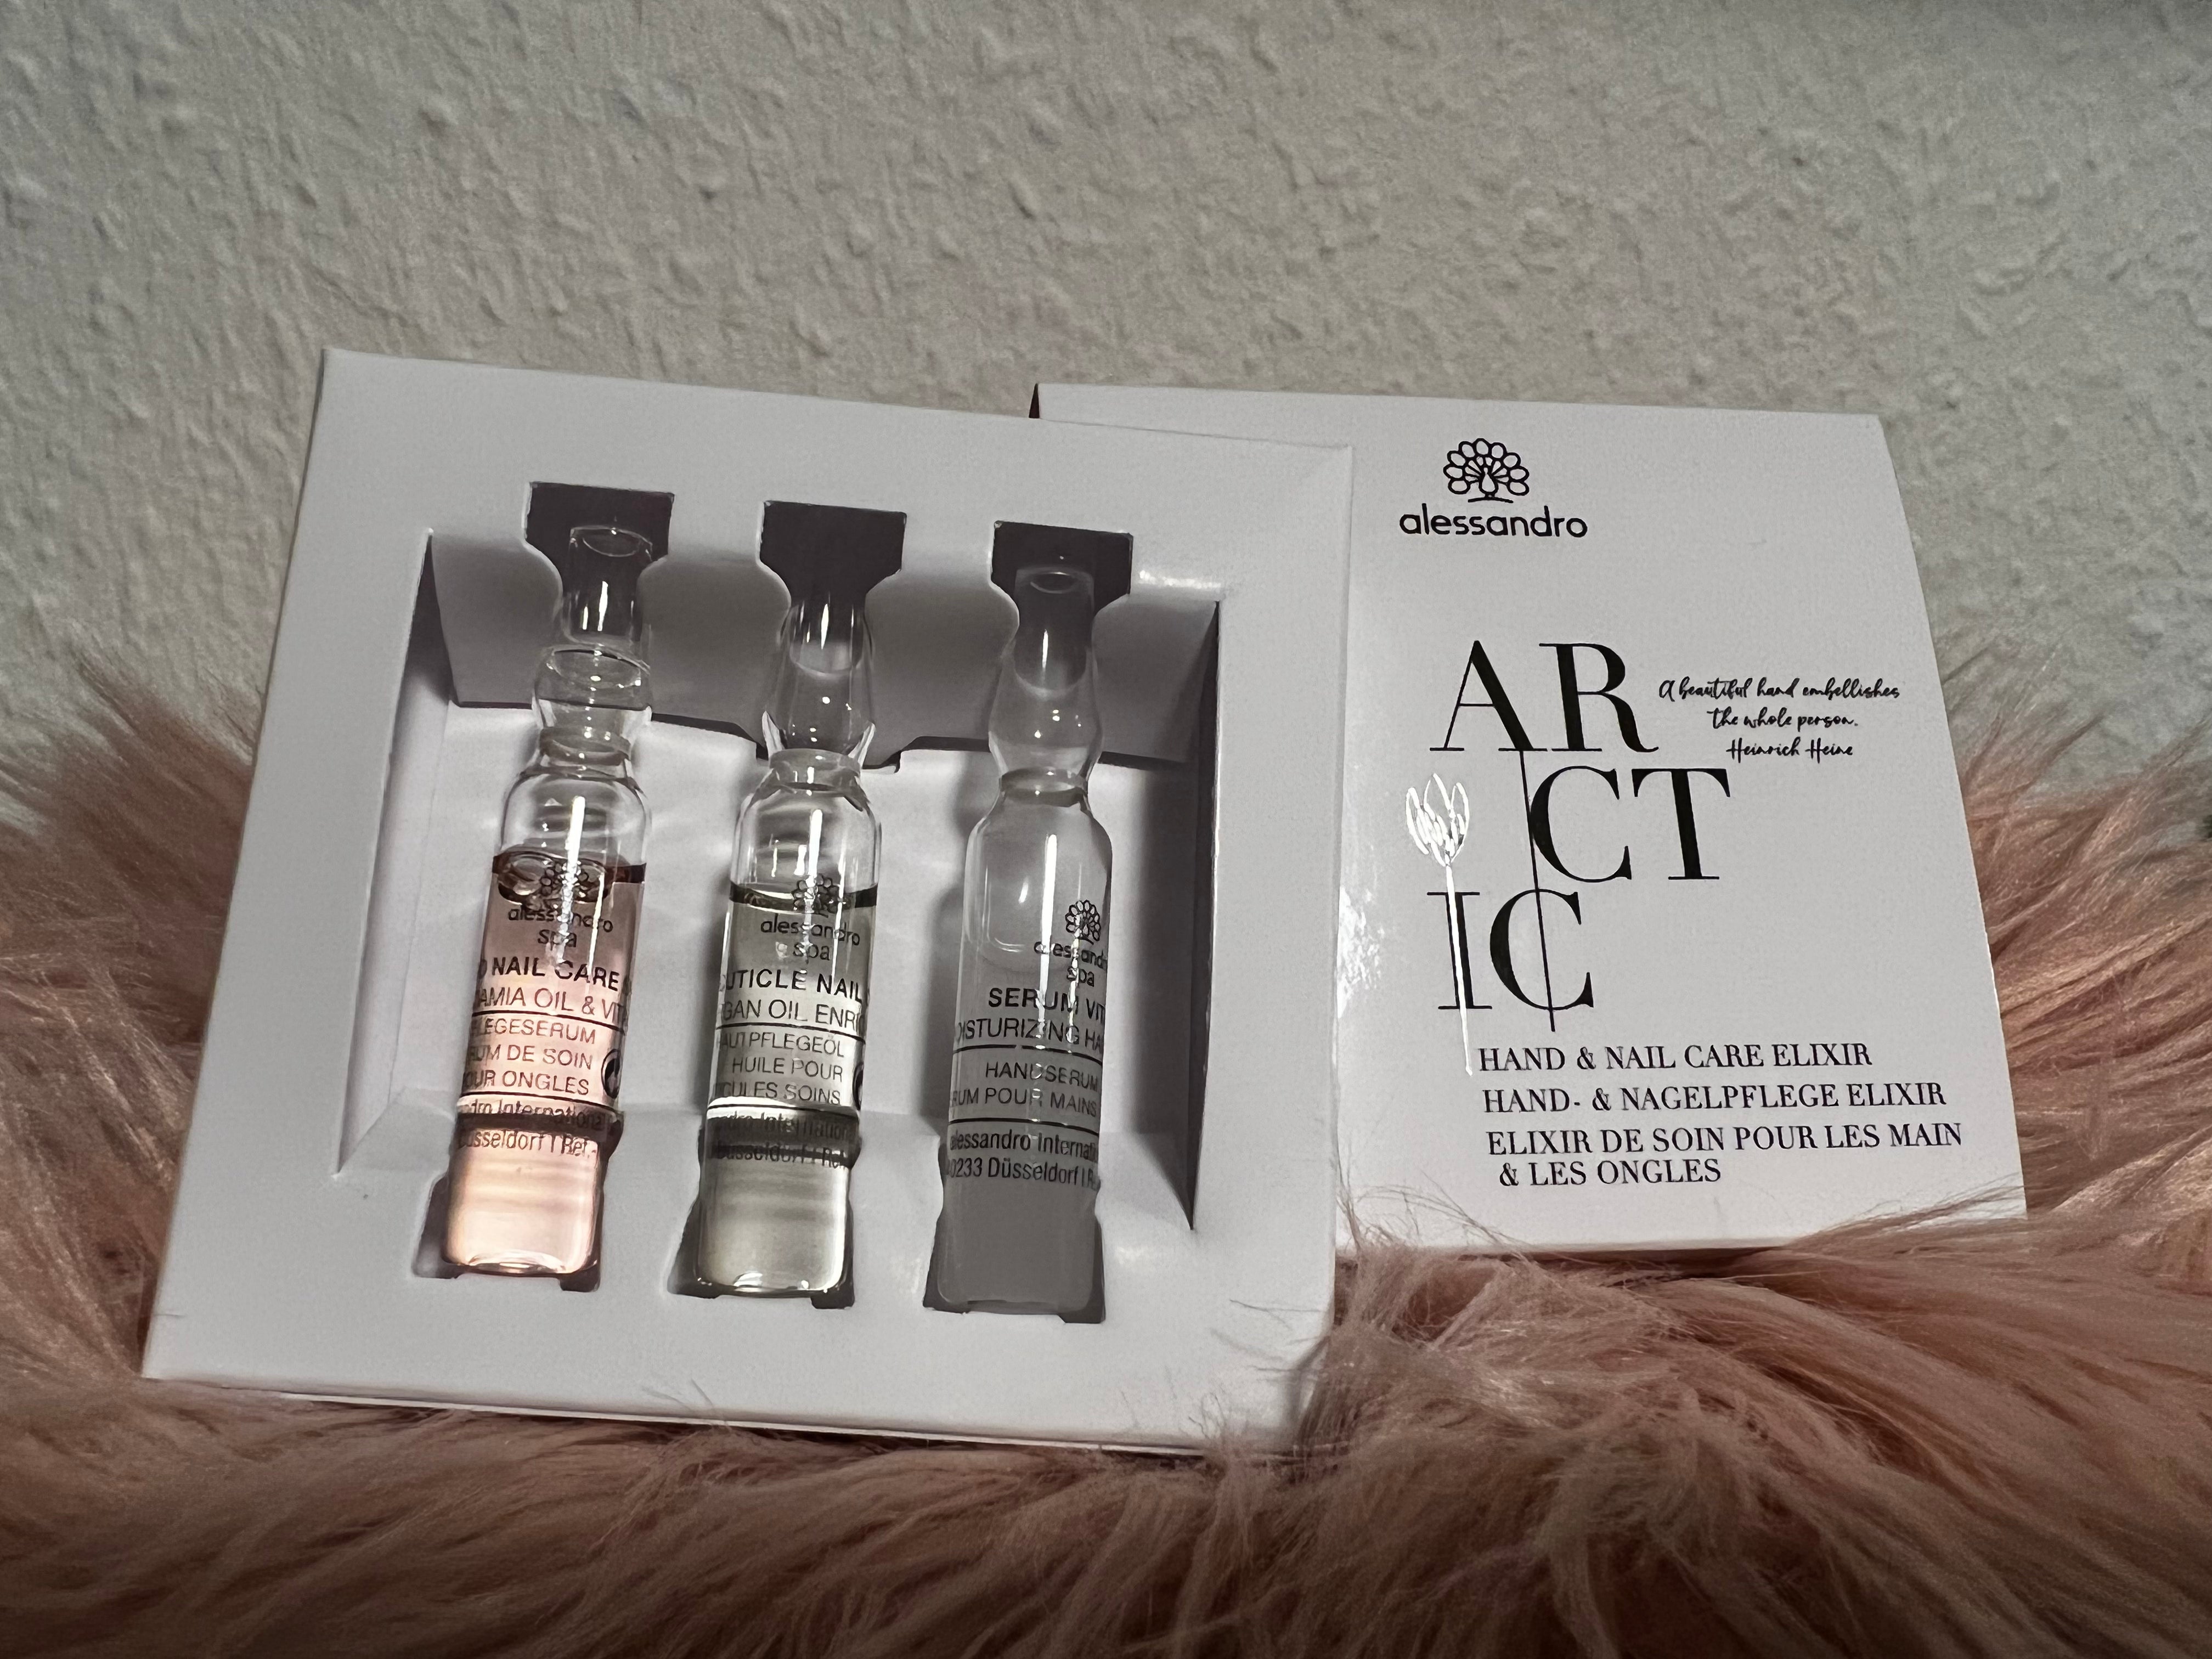 Alessandro Arctic Körperkult Nail kaufen – Care Elixir & Hand